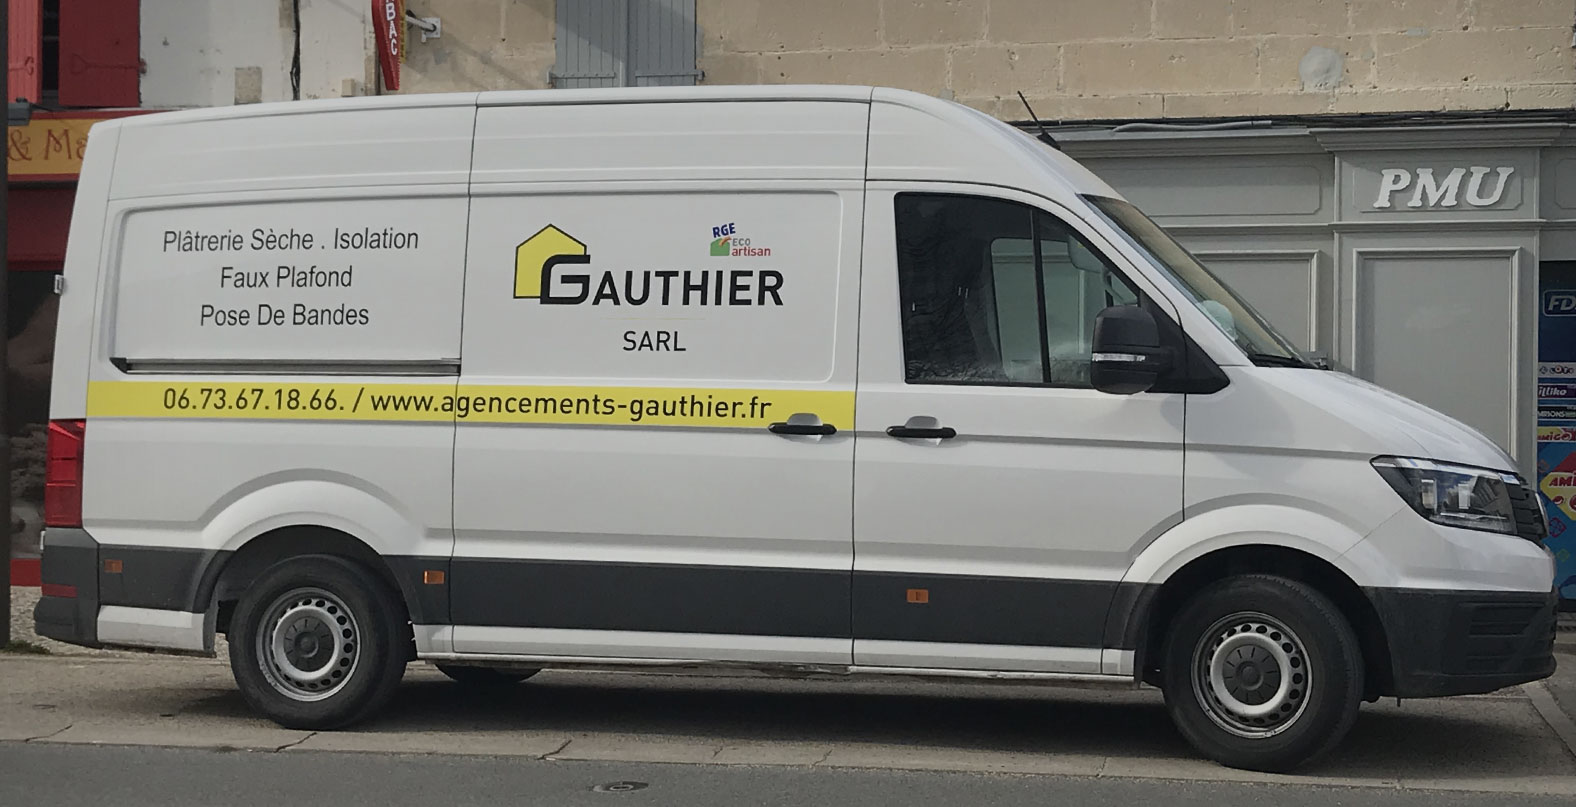 Gauthier SARL